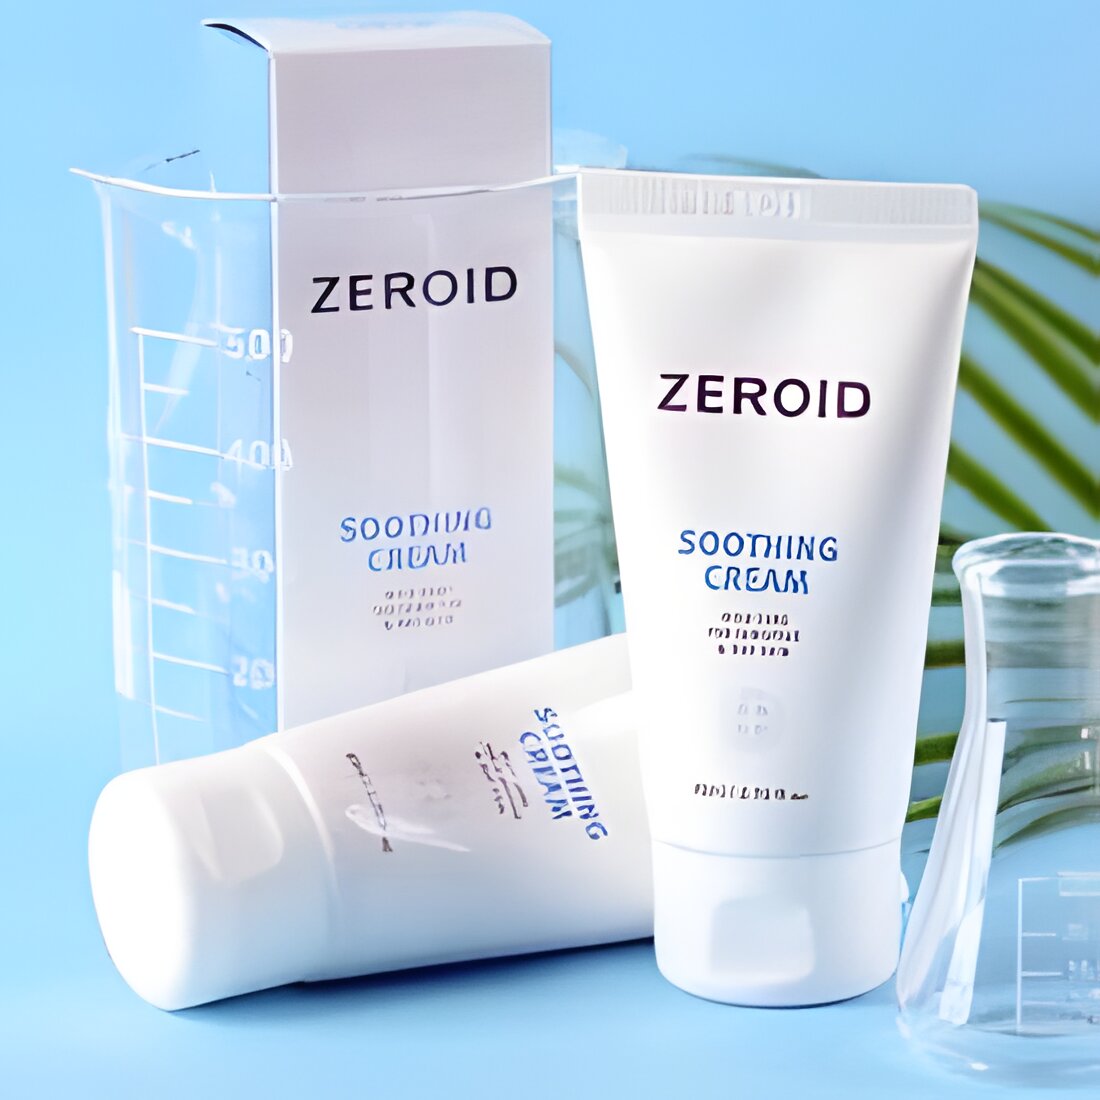 Free ZEROID Soothing Cream